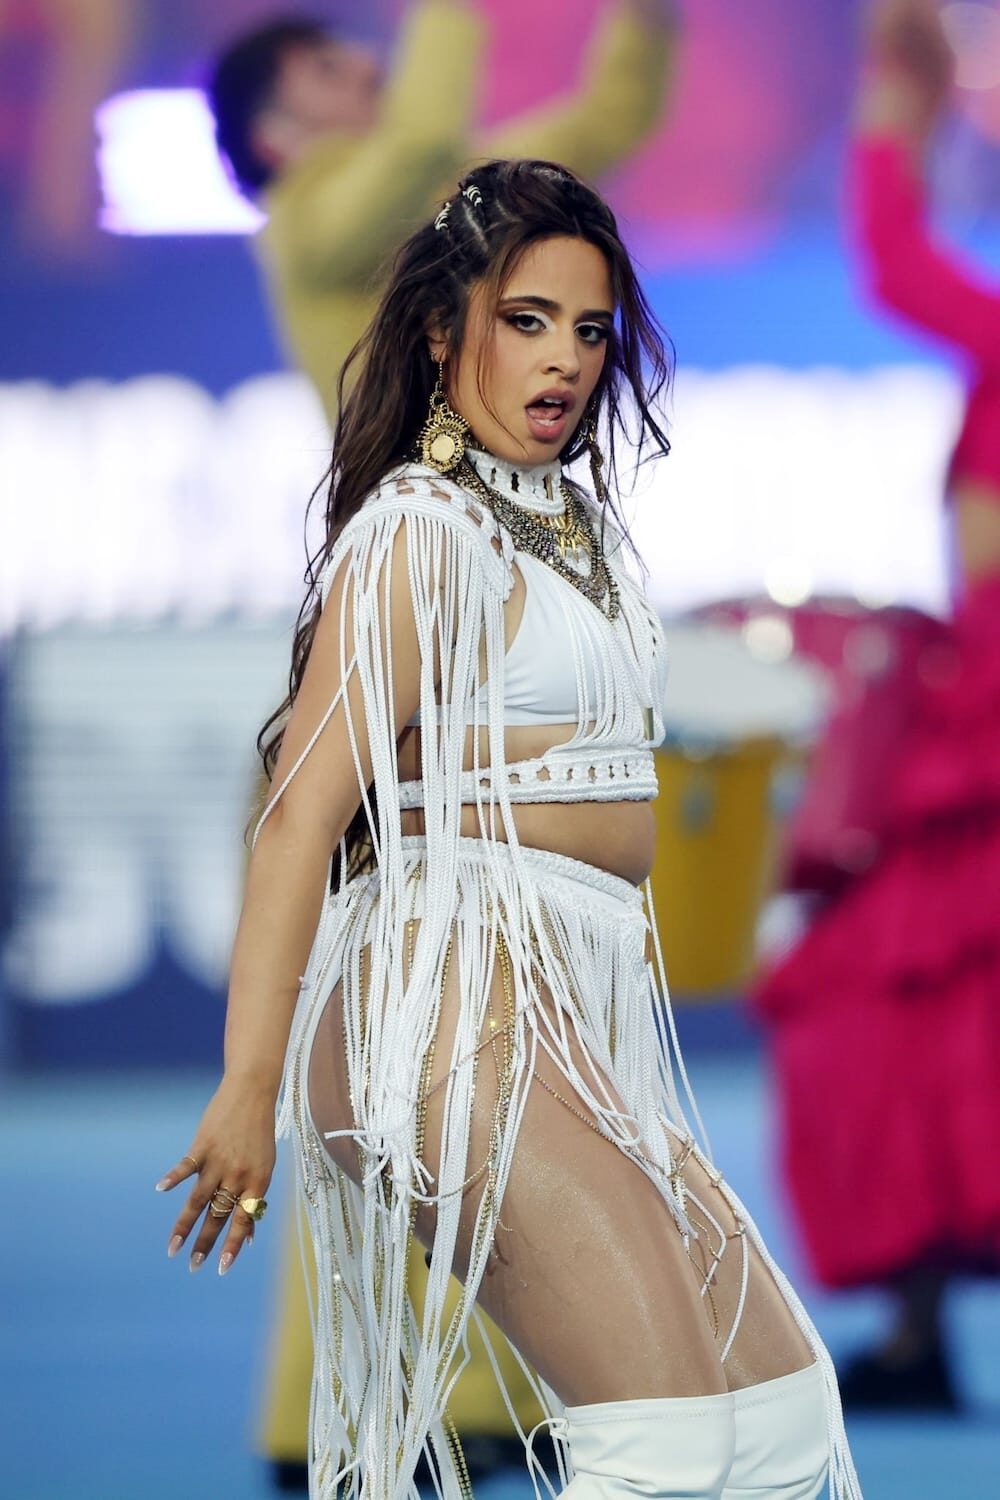 Camila Cabello Gave a Sensational Performance at 2022 UEFA Champions League Final